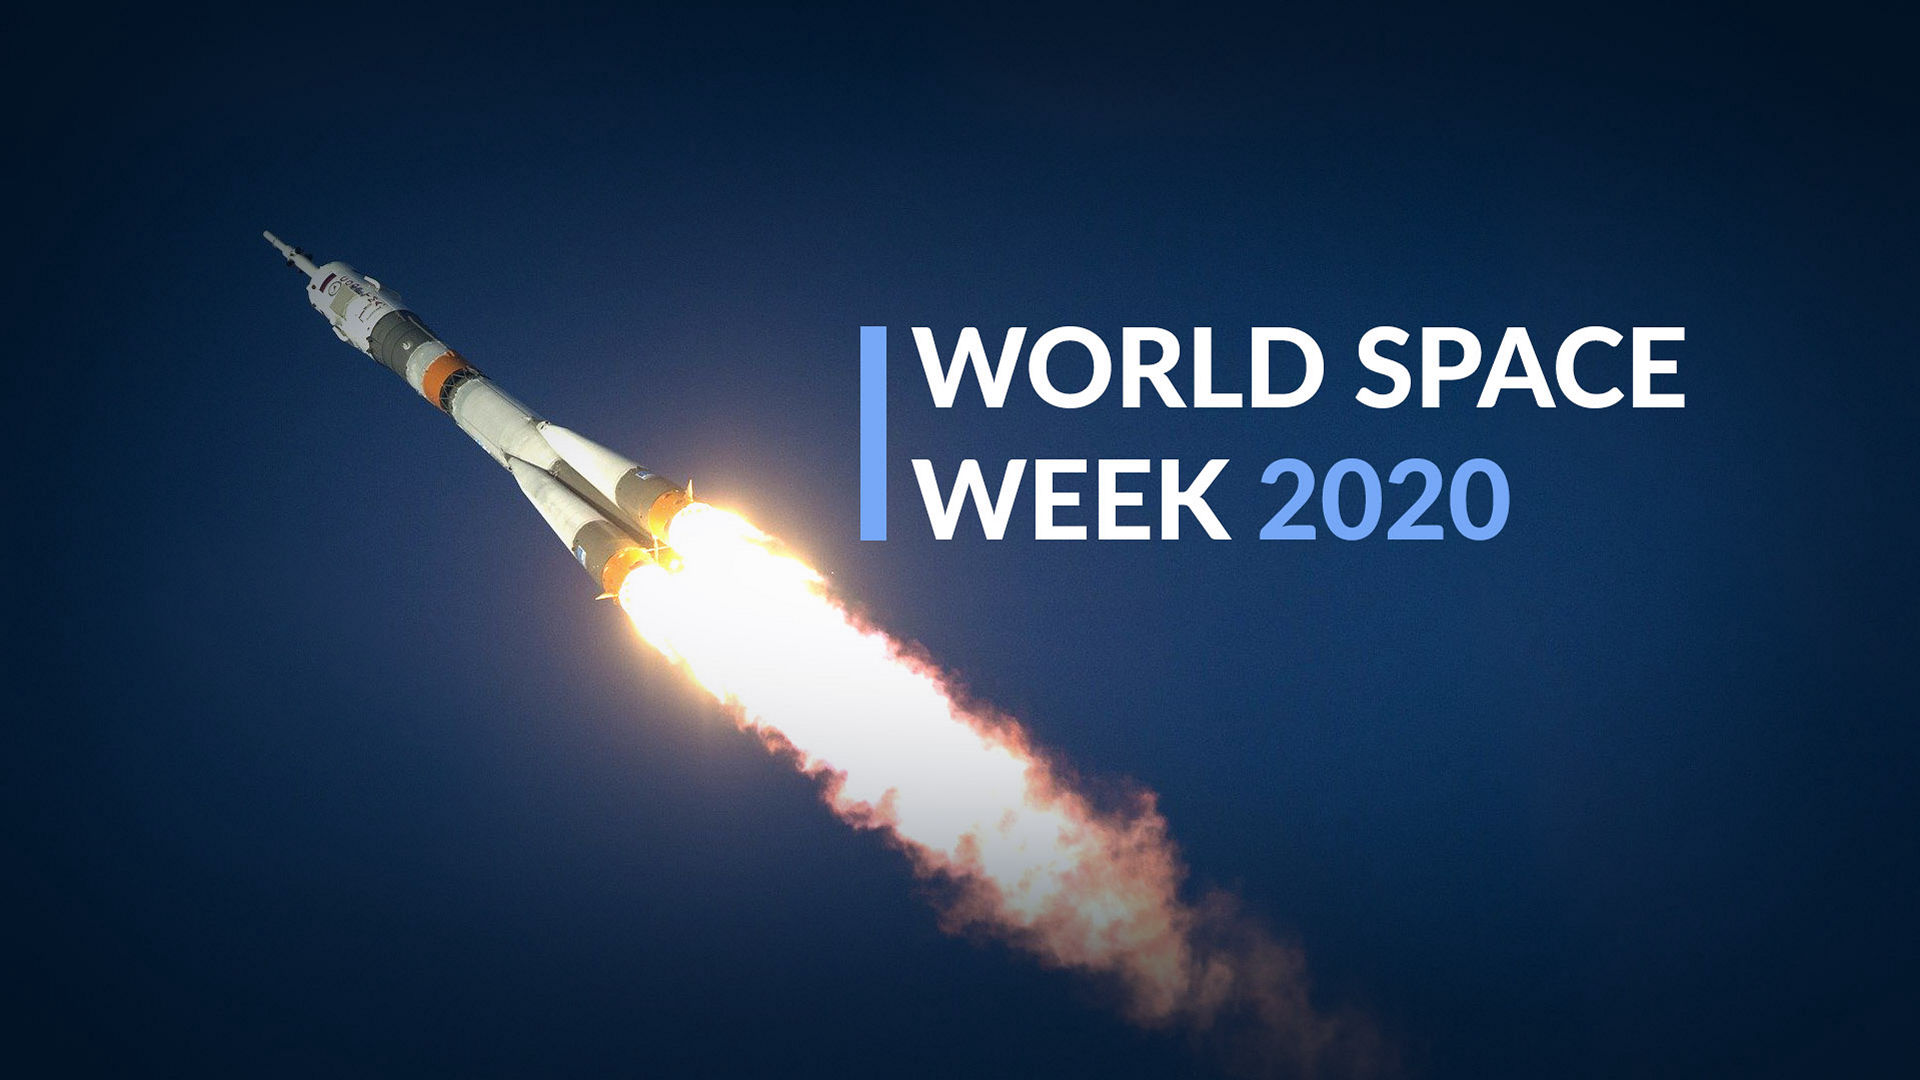 World Space Week 2020 Is Here!